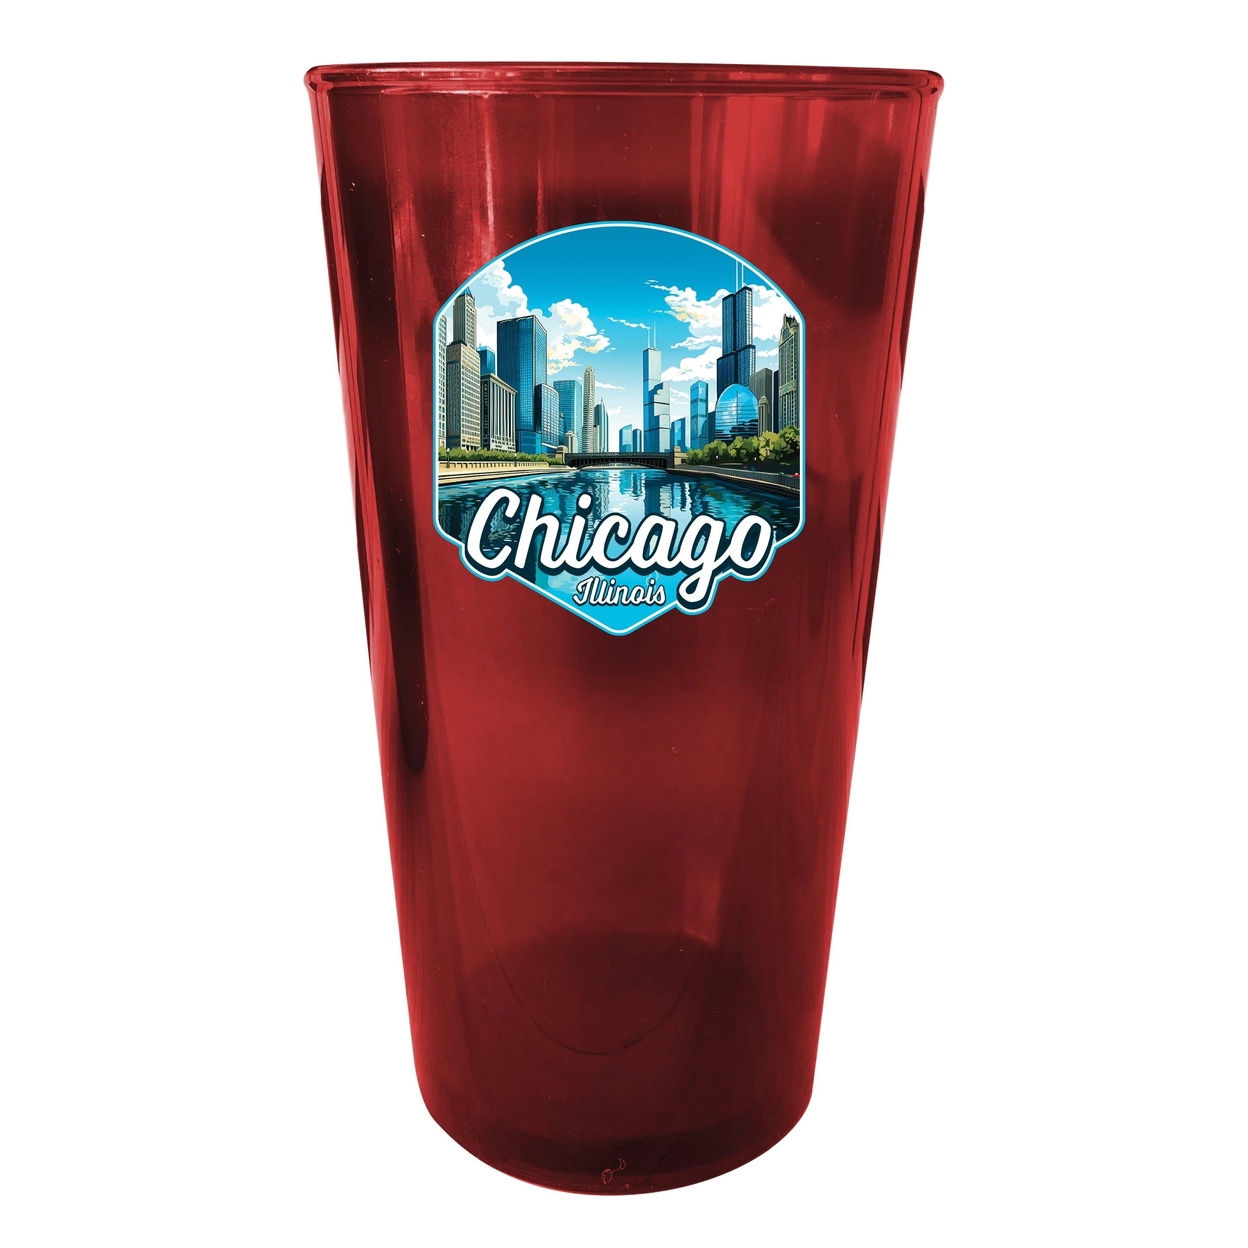 Chicago Illinois A Souvenir Plastic 16 Oz Pint - Red,,Single